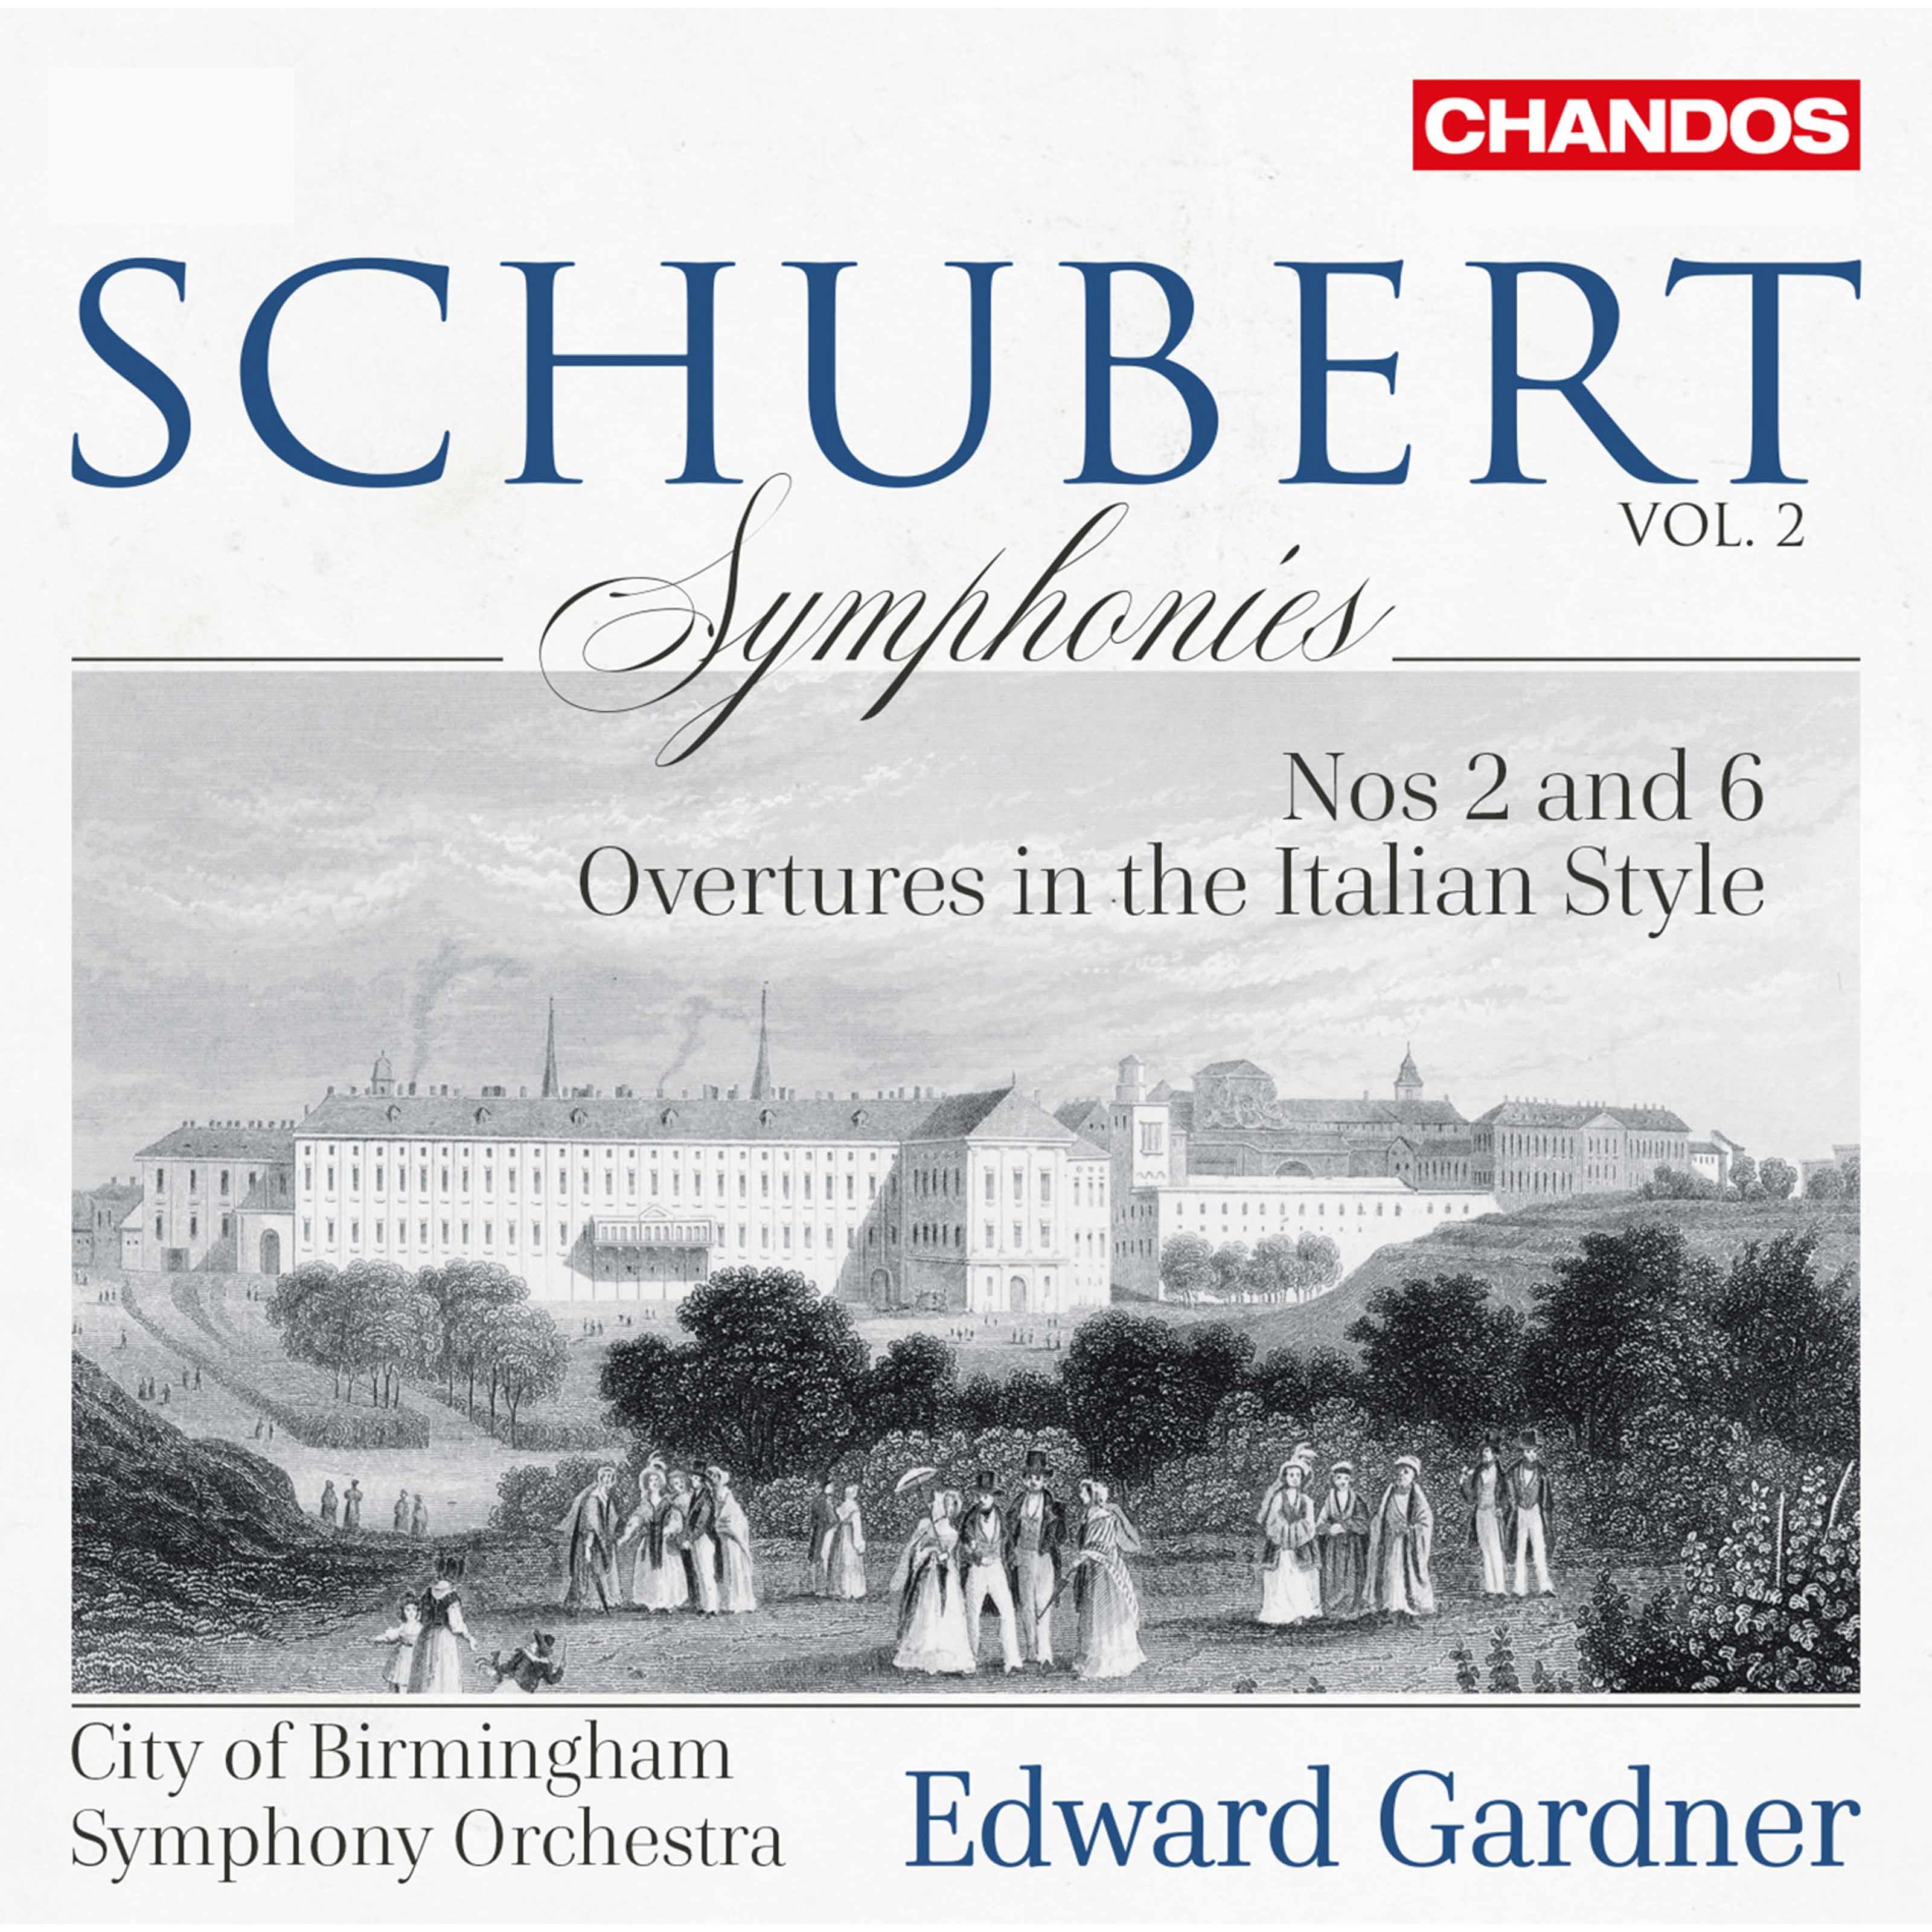 City of Birmingham Symphony Orchestra, Edward Gardner - Schubert: Symphonies, Vol. 2 - Nos. 2 & 6 & Italian Overtures (2020) [FLAC 24bit/96kHz]